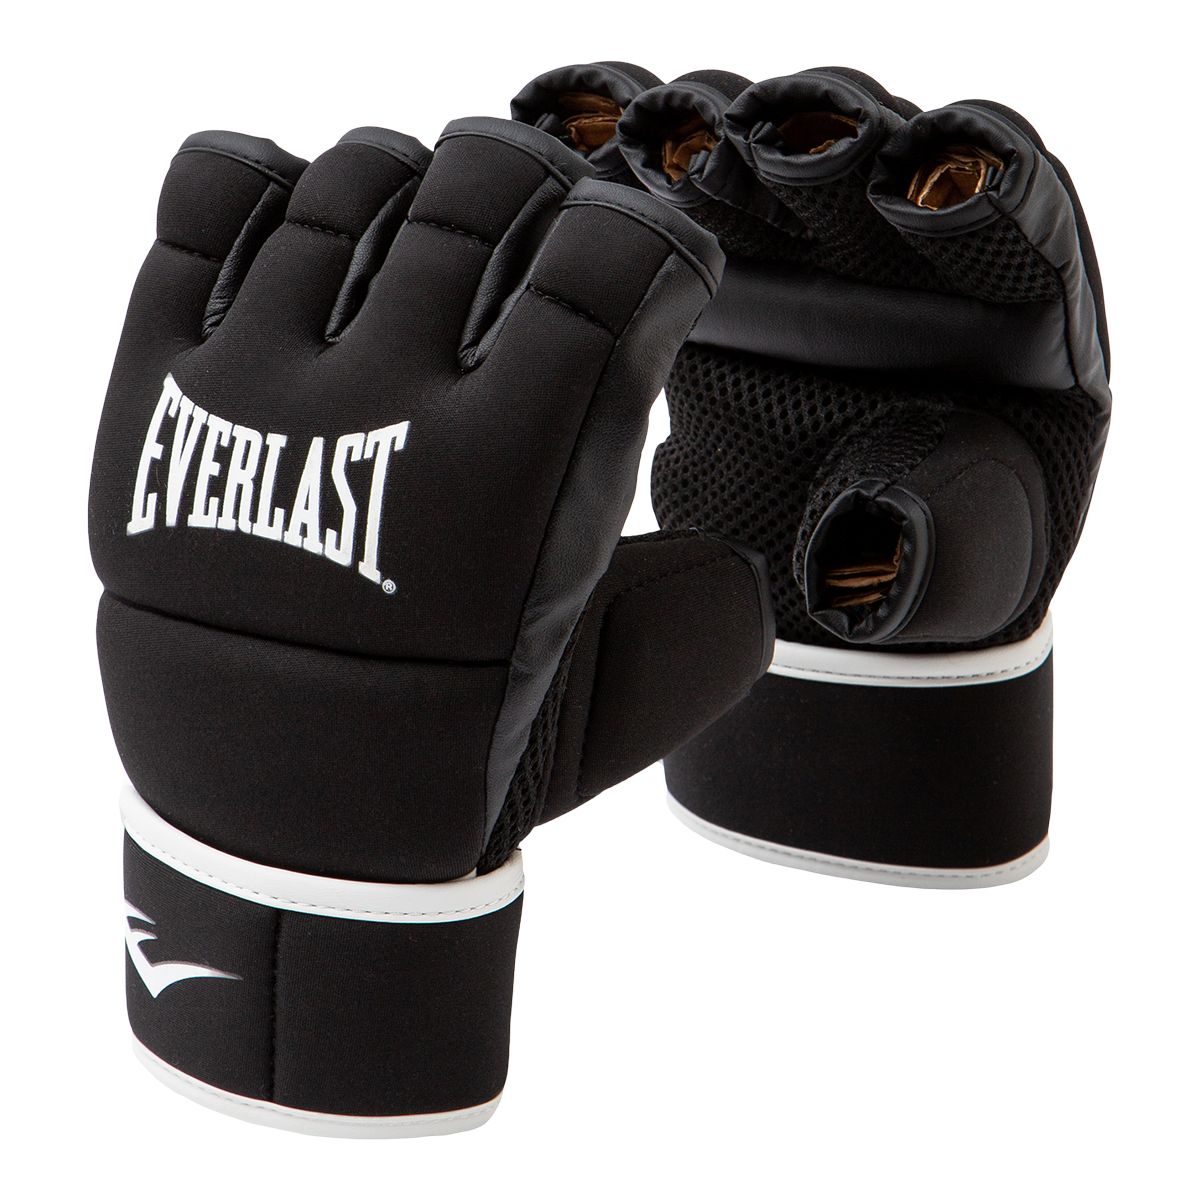 Core Kickboxing/Training Gloves